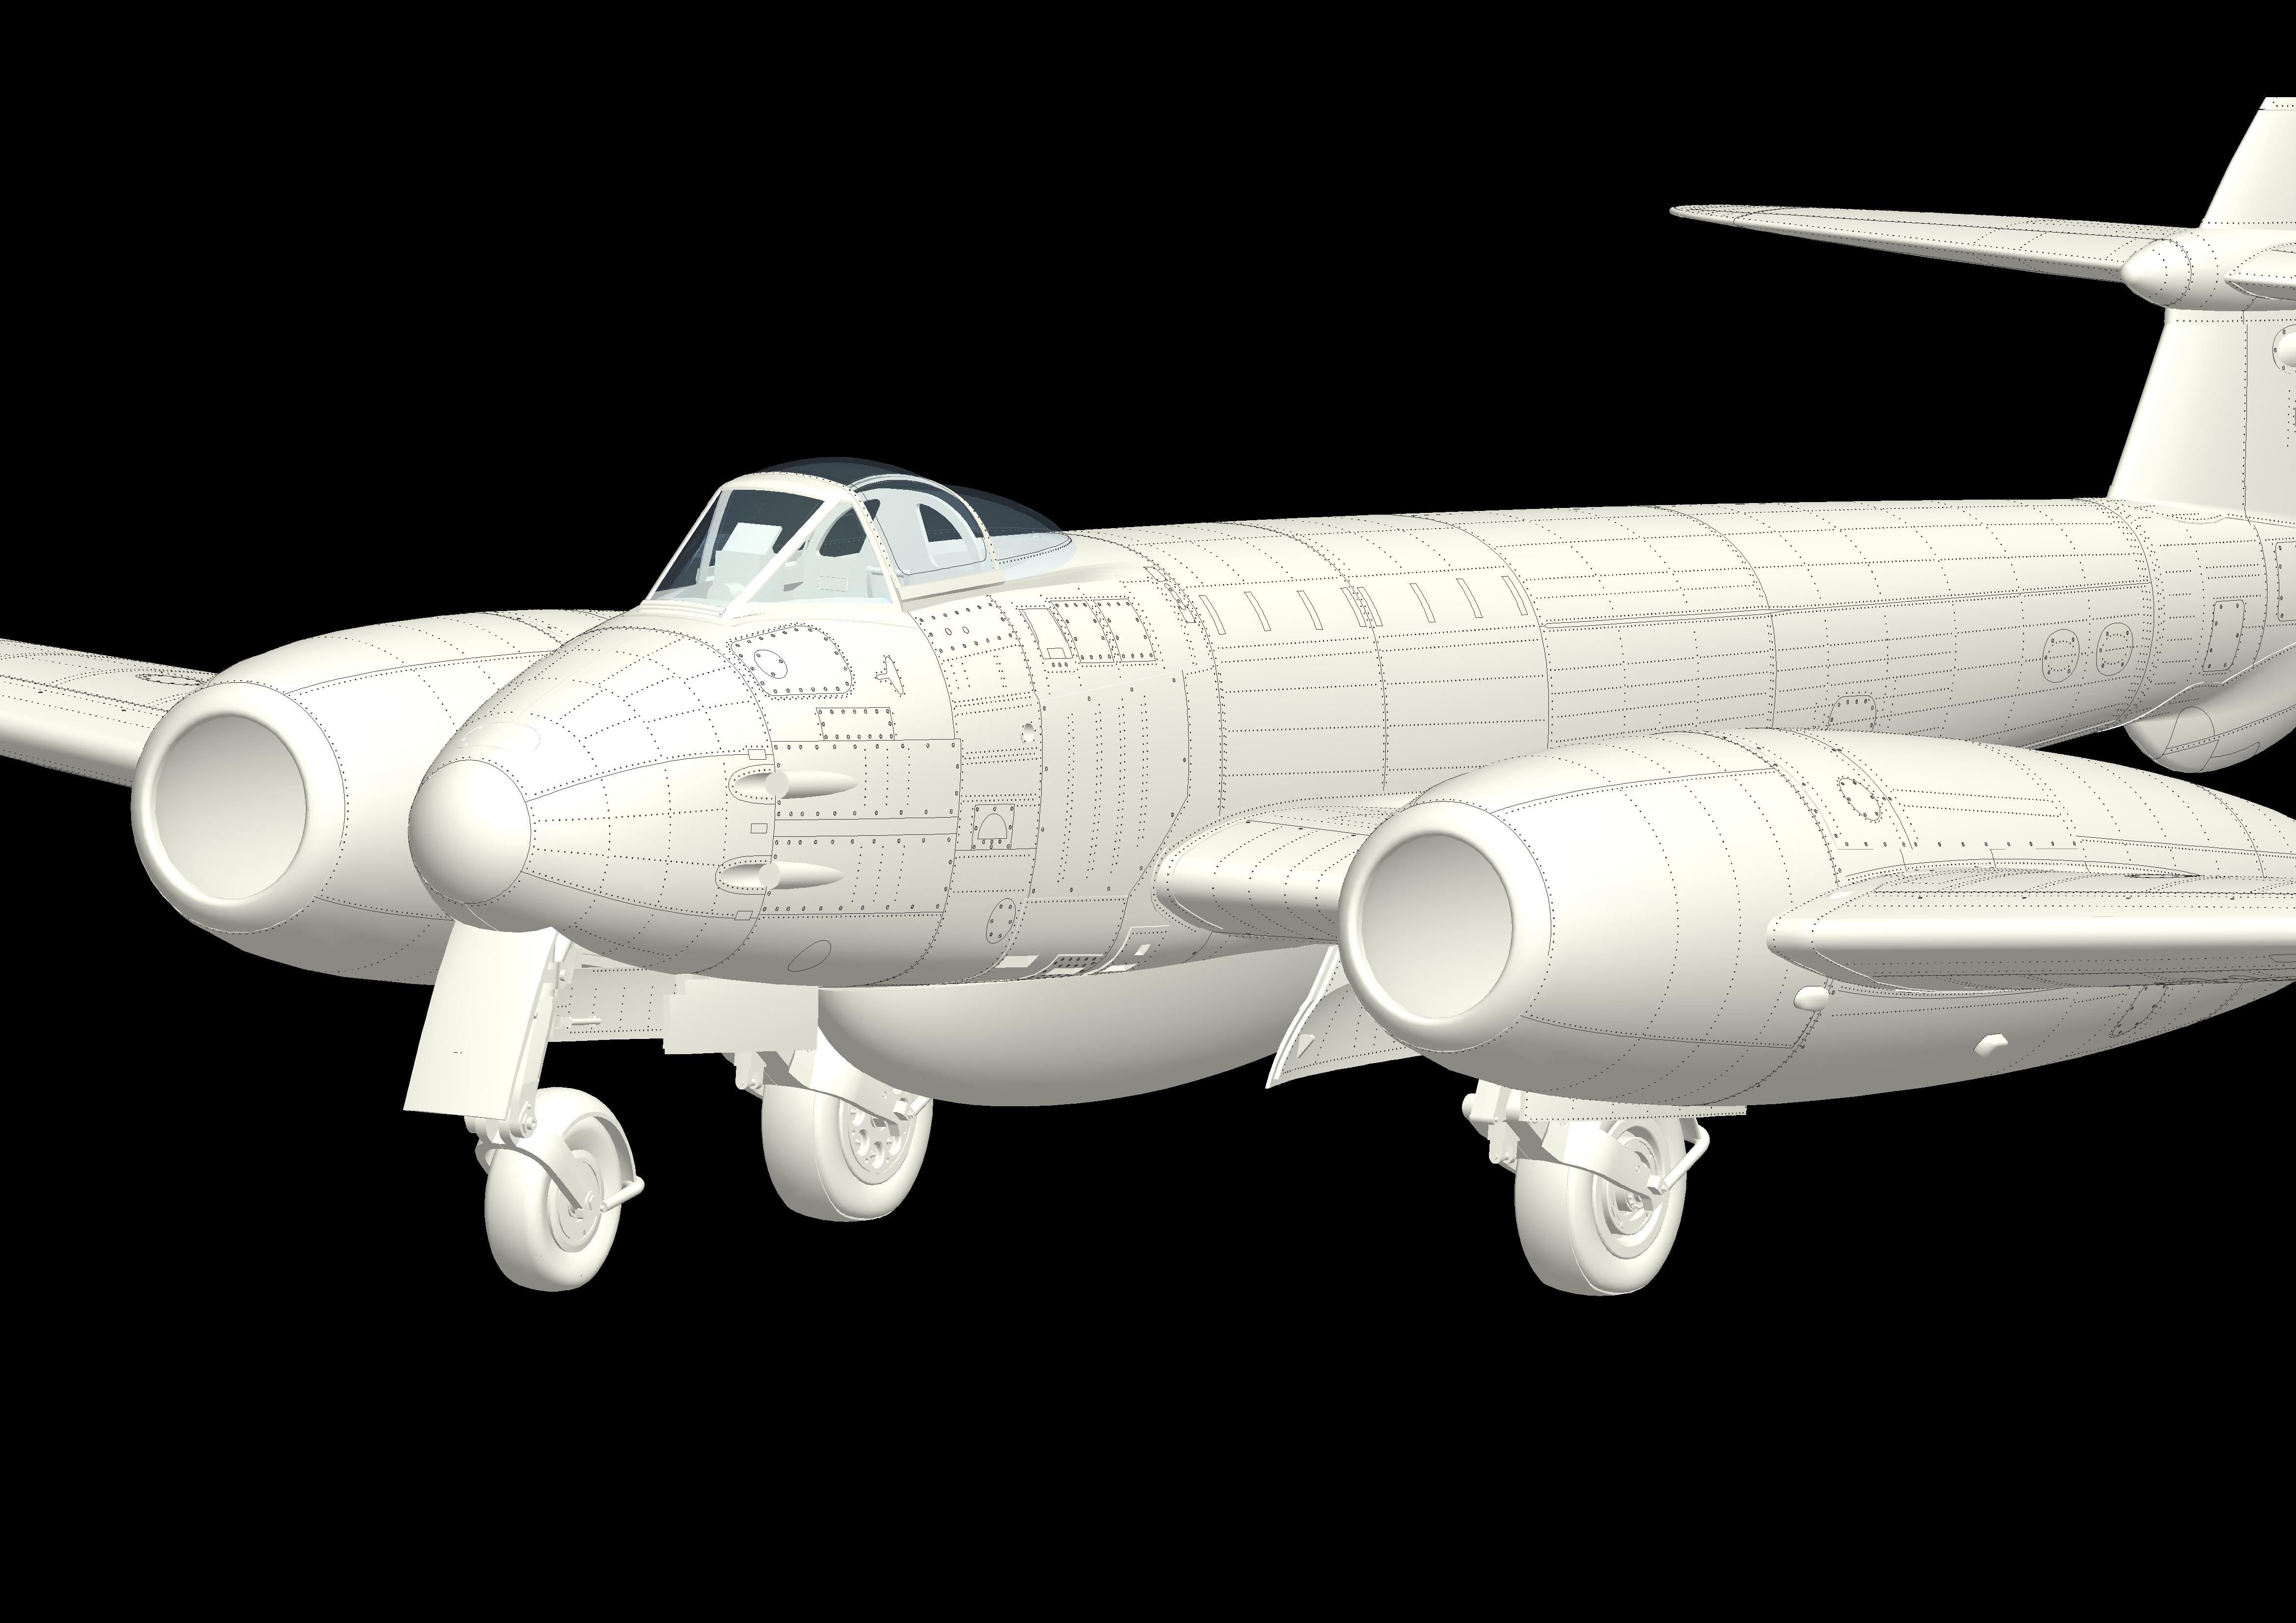 HK Models 1/32 Gloster Meteor F4 01e006 for sale online 